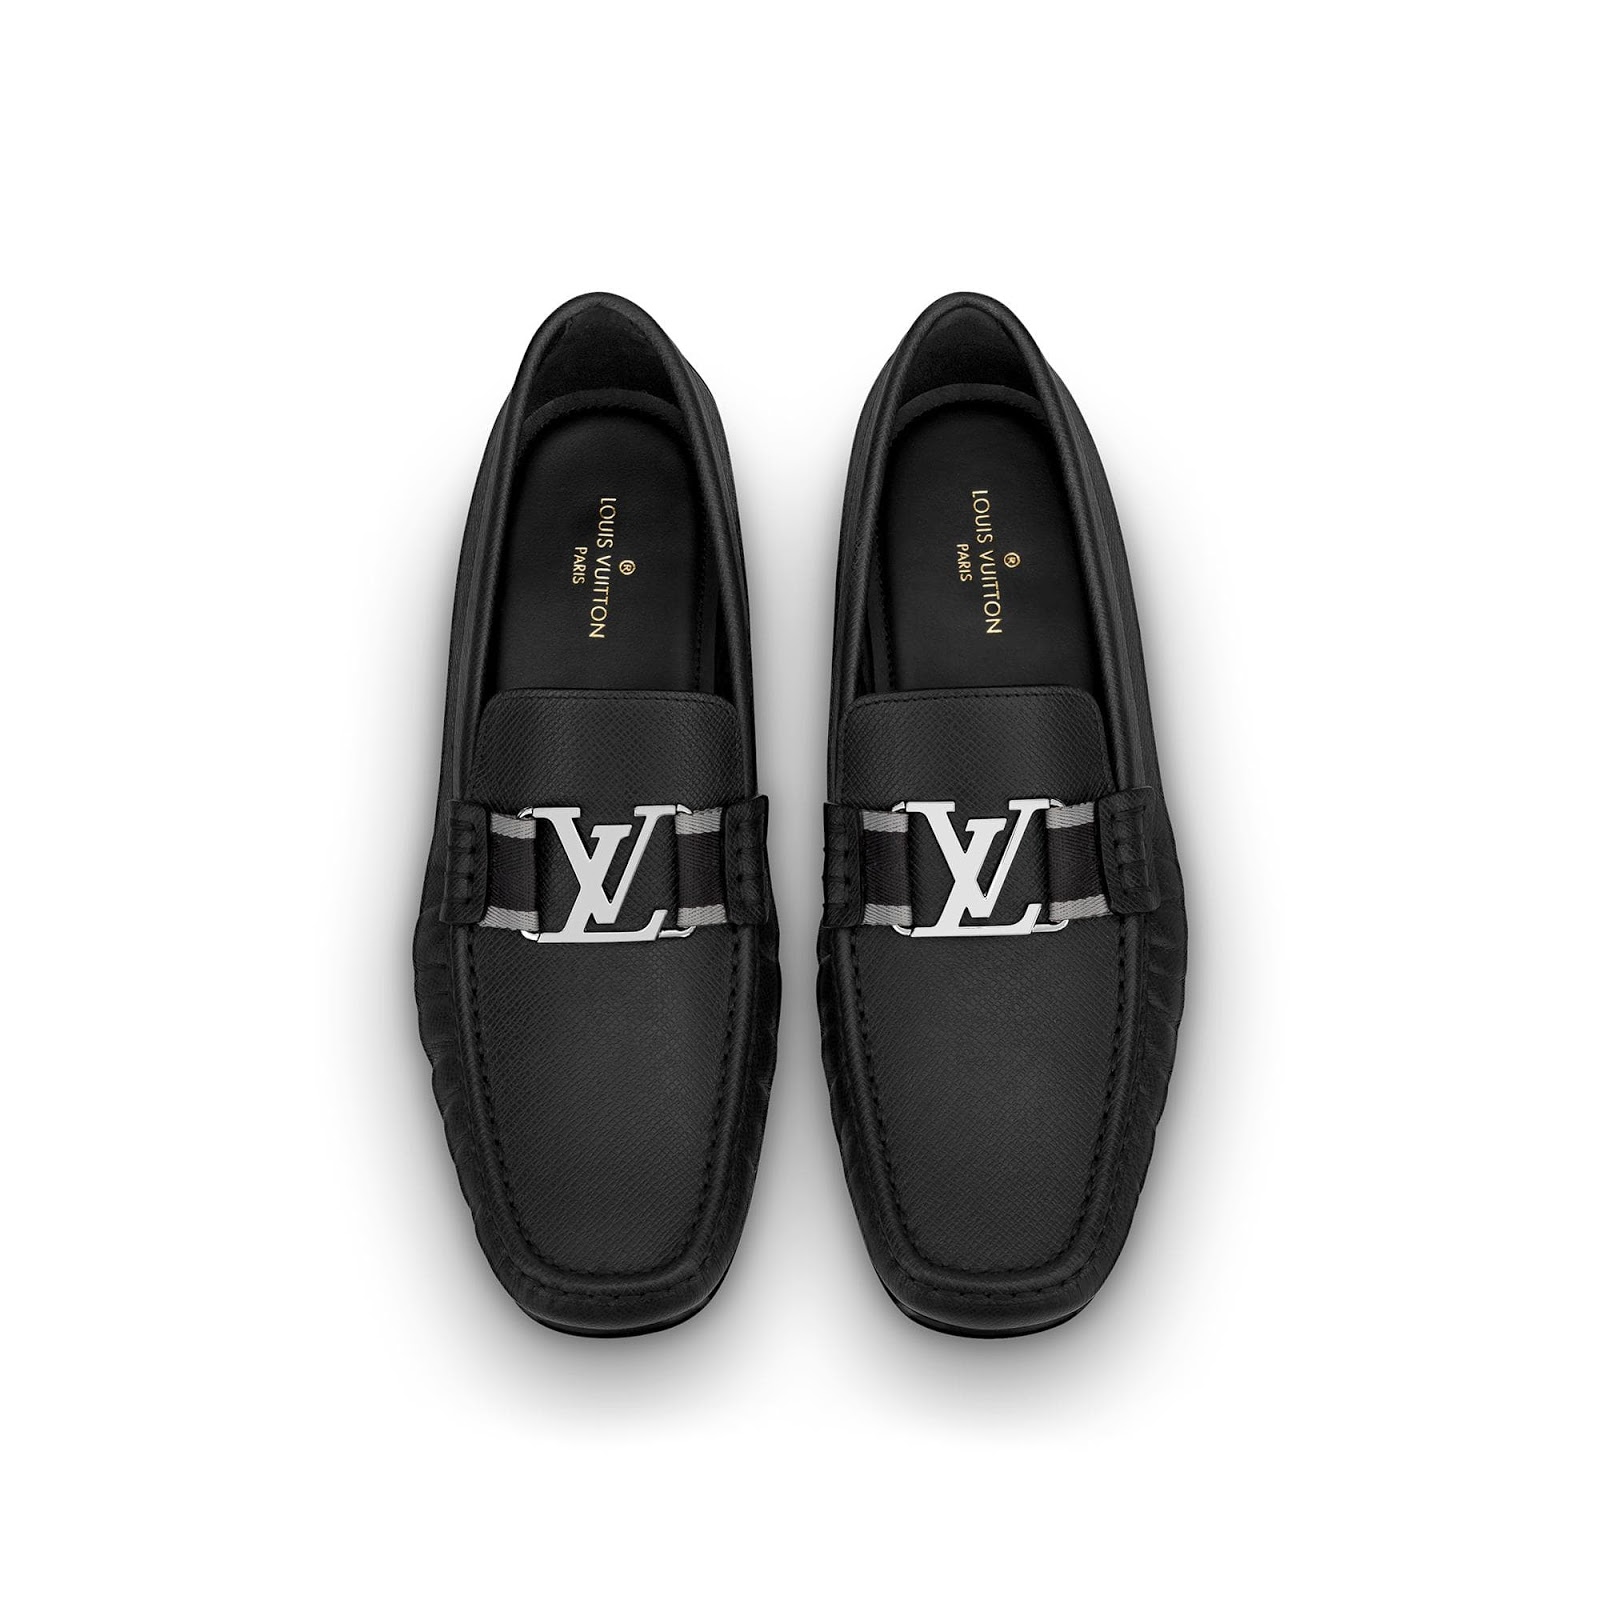 Giày Nam Louis Vuitton Siêu Cấp GNSCLV0017  Giày Lười Louis Vuitton